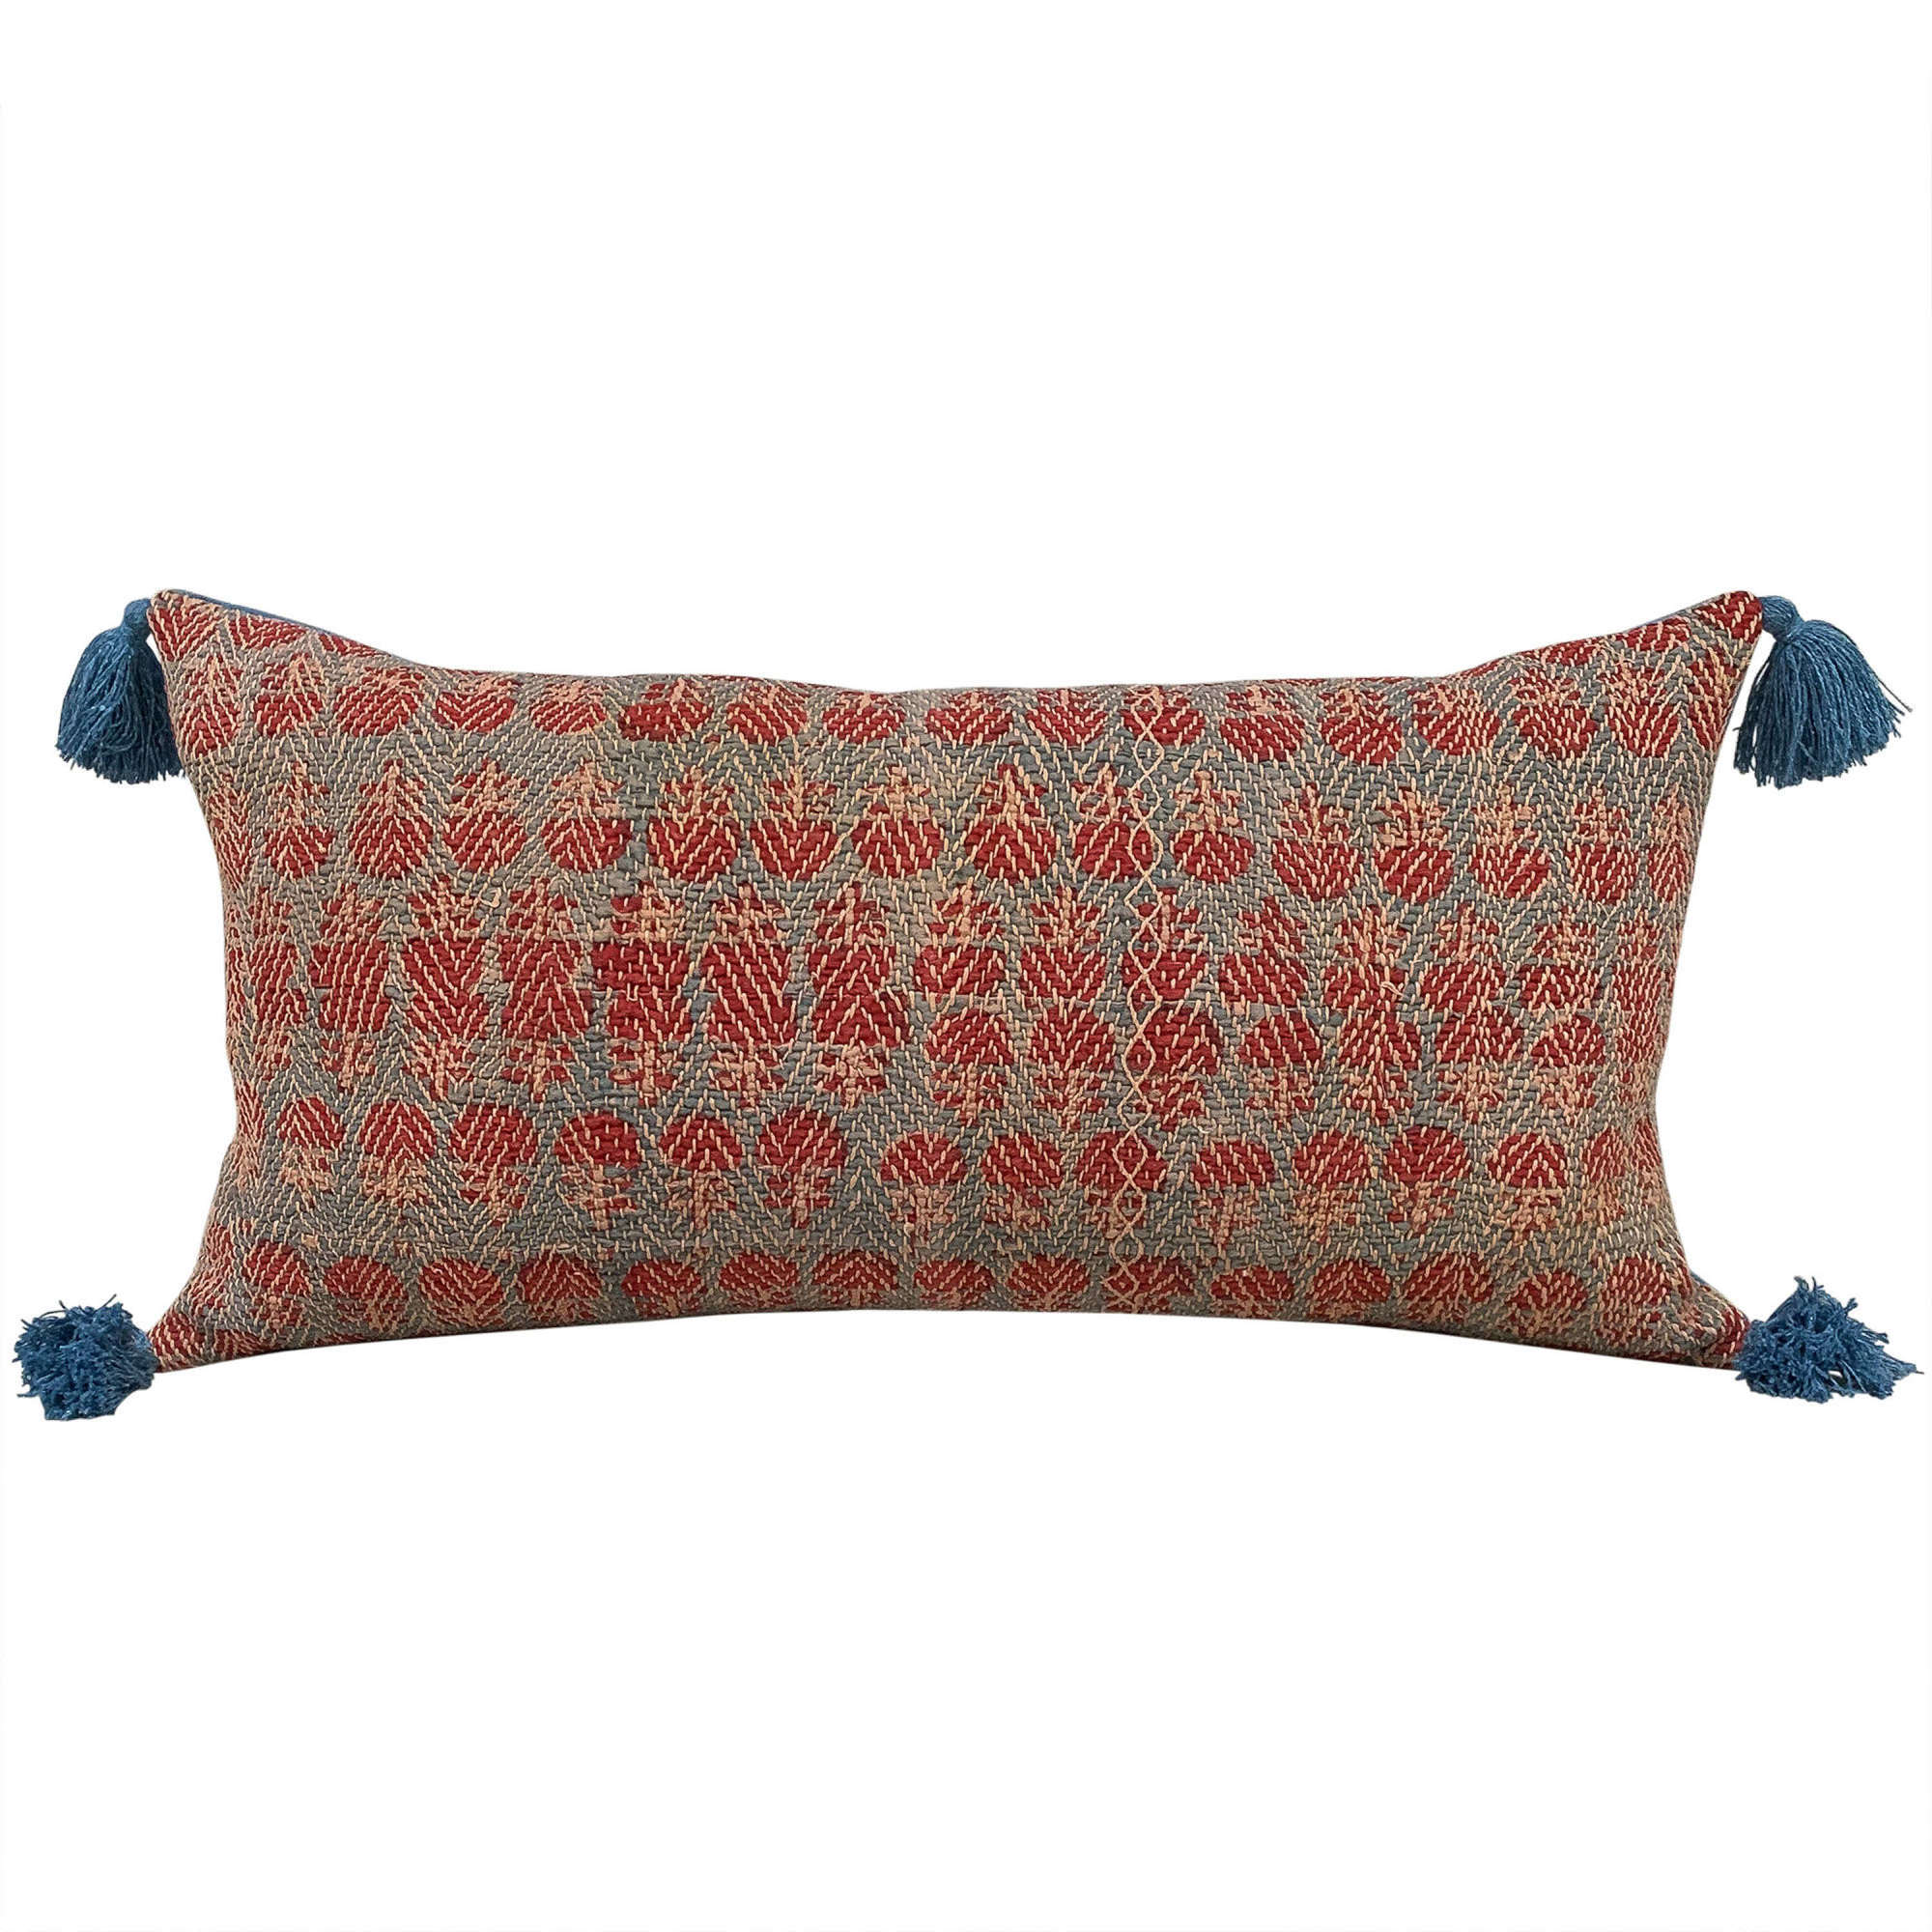 Banjara cushion with blue tassels